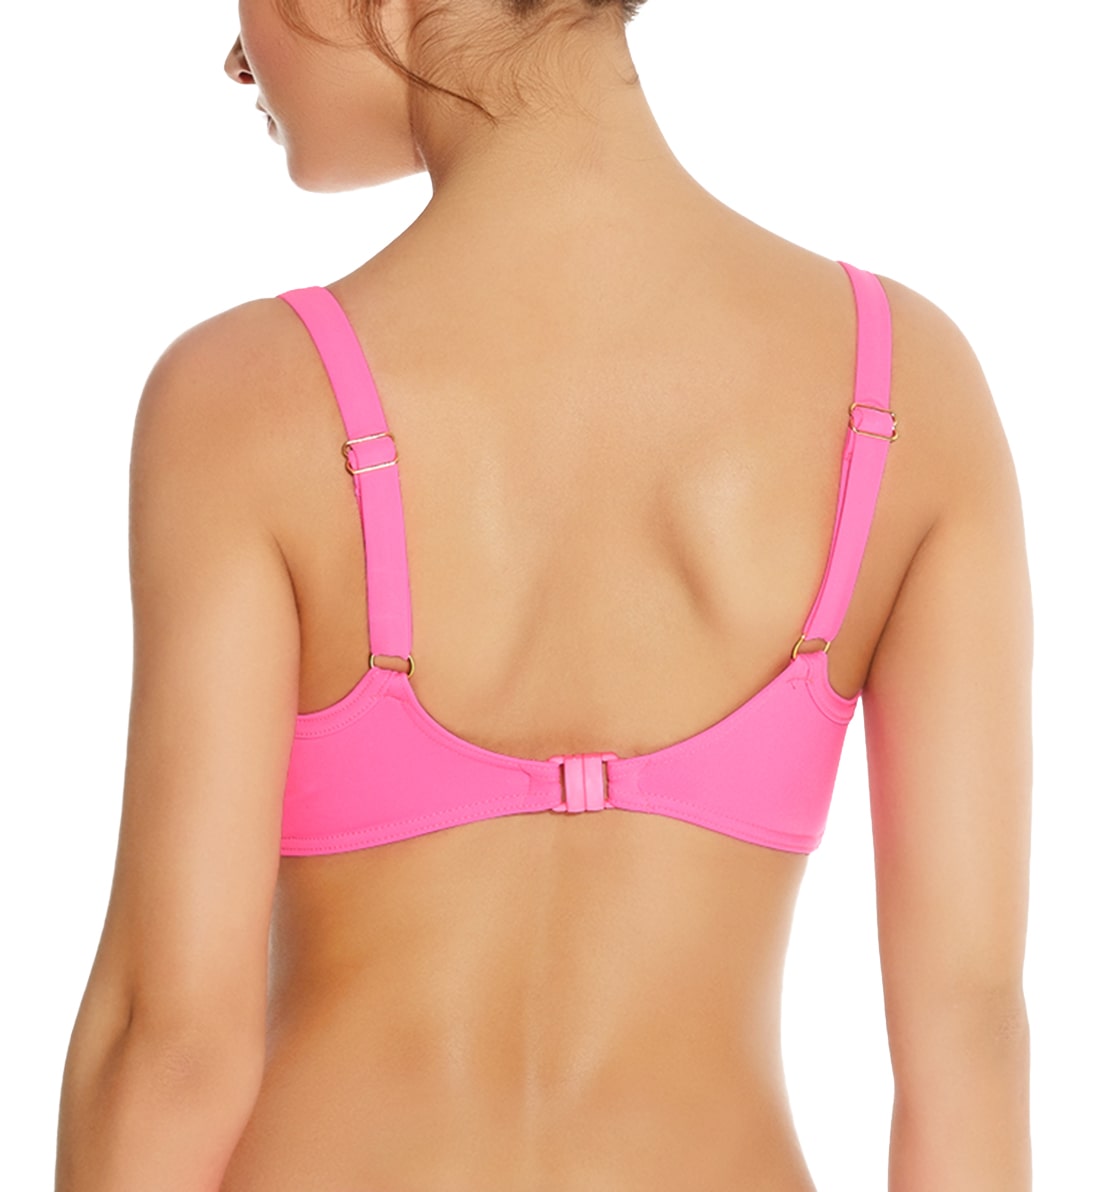 Freya Deco Molded Underwire Bikini Swim Top (3284),28D,Bright Pink - Bright Pink,28D